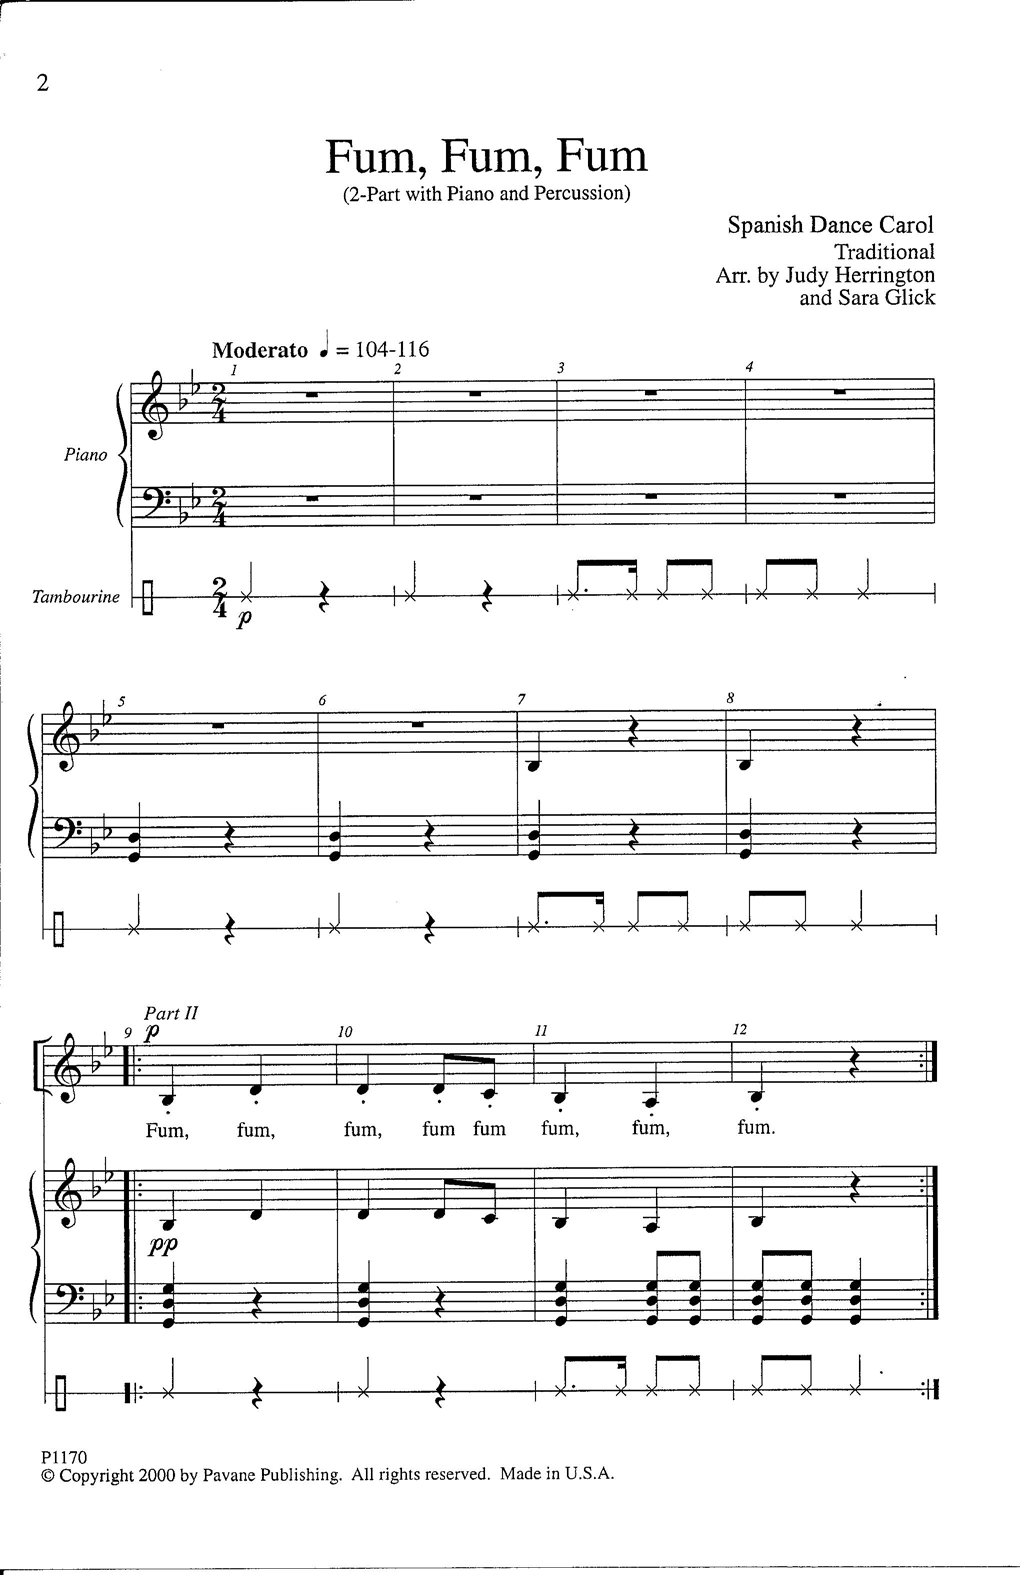 Judith Herrington and Sara Glick Fum, Fum, Fum Sheet Music Notes & Chords for 2-Part Choir - Download or Print PDF